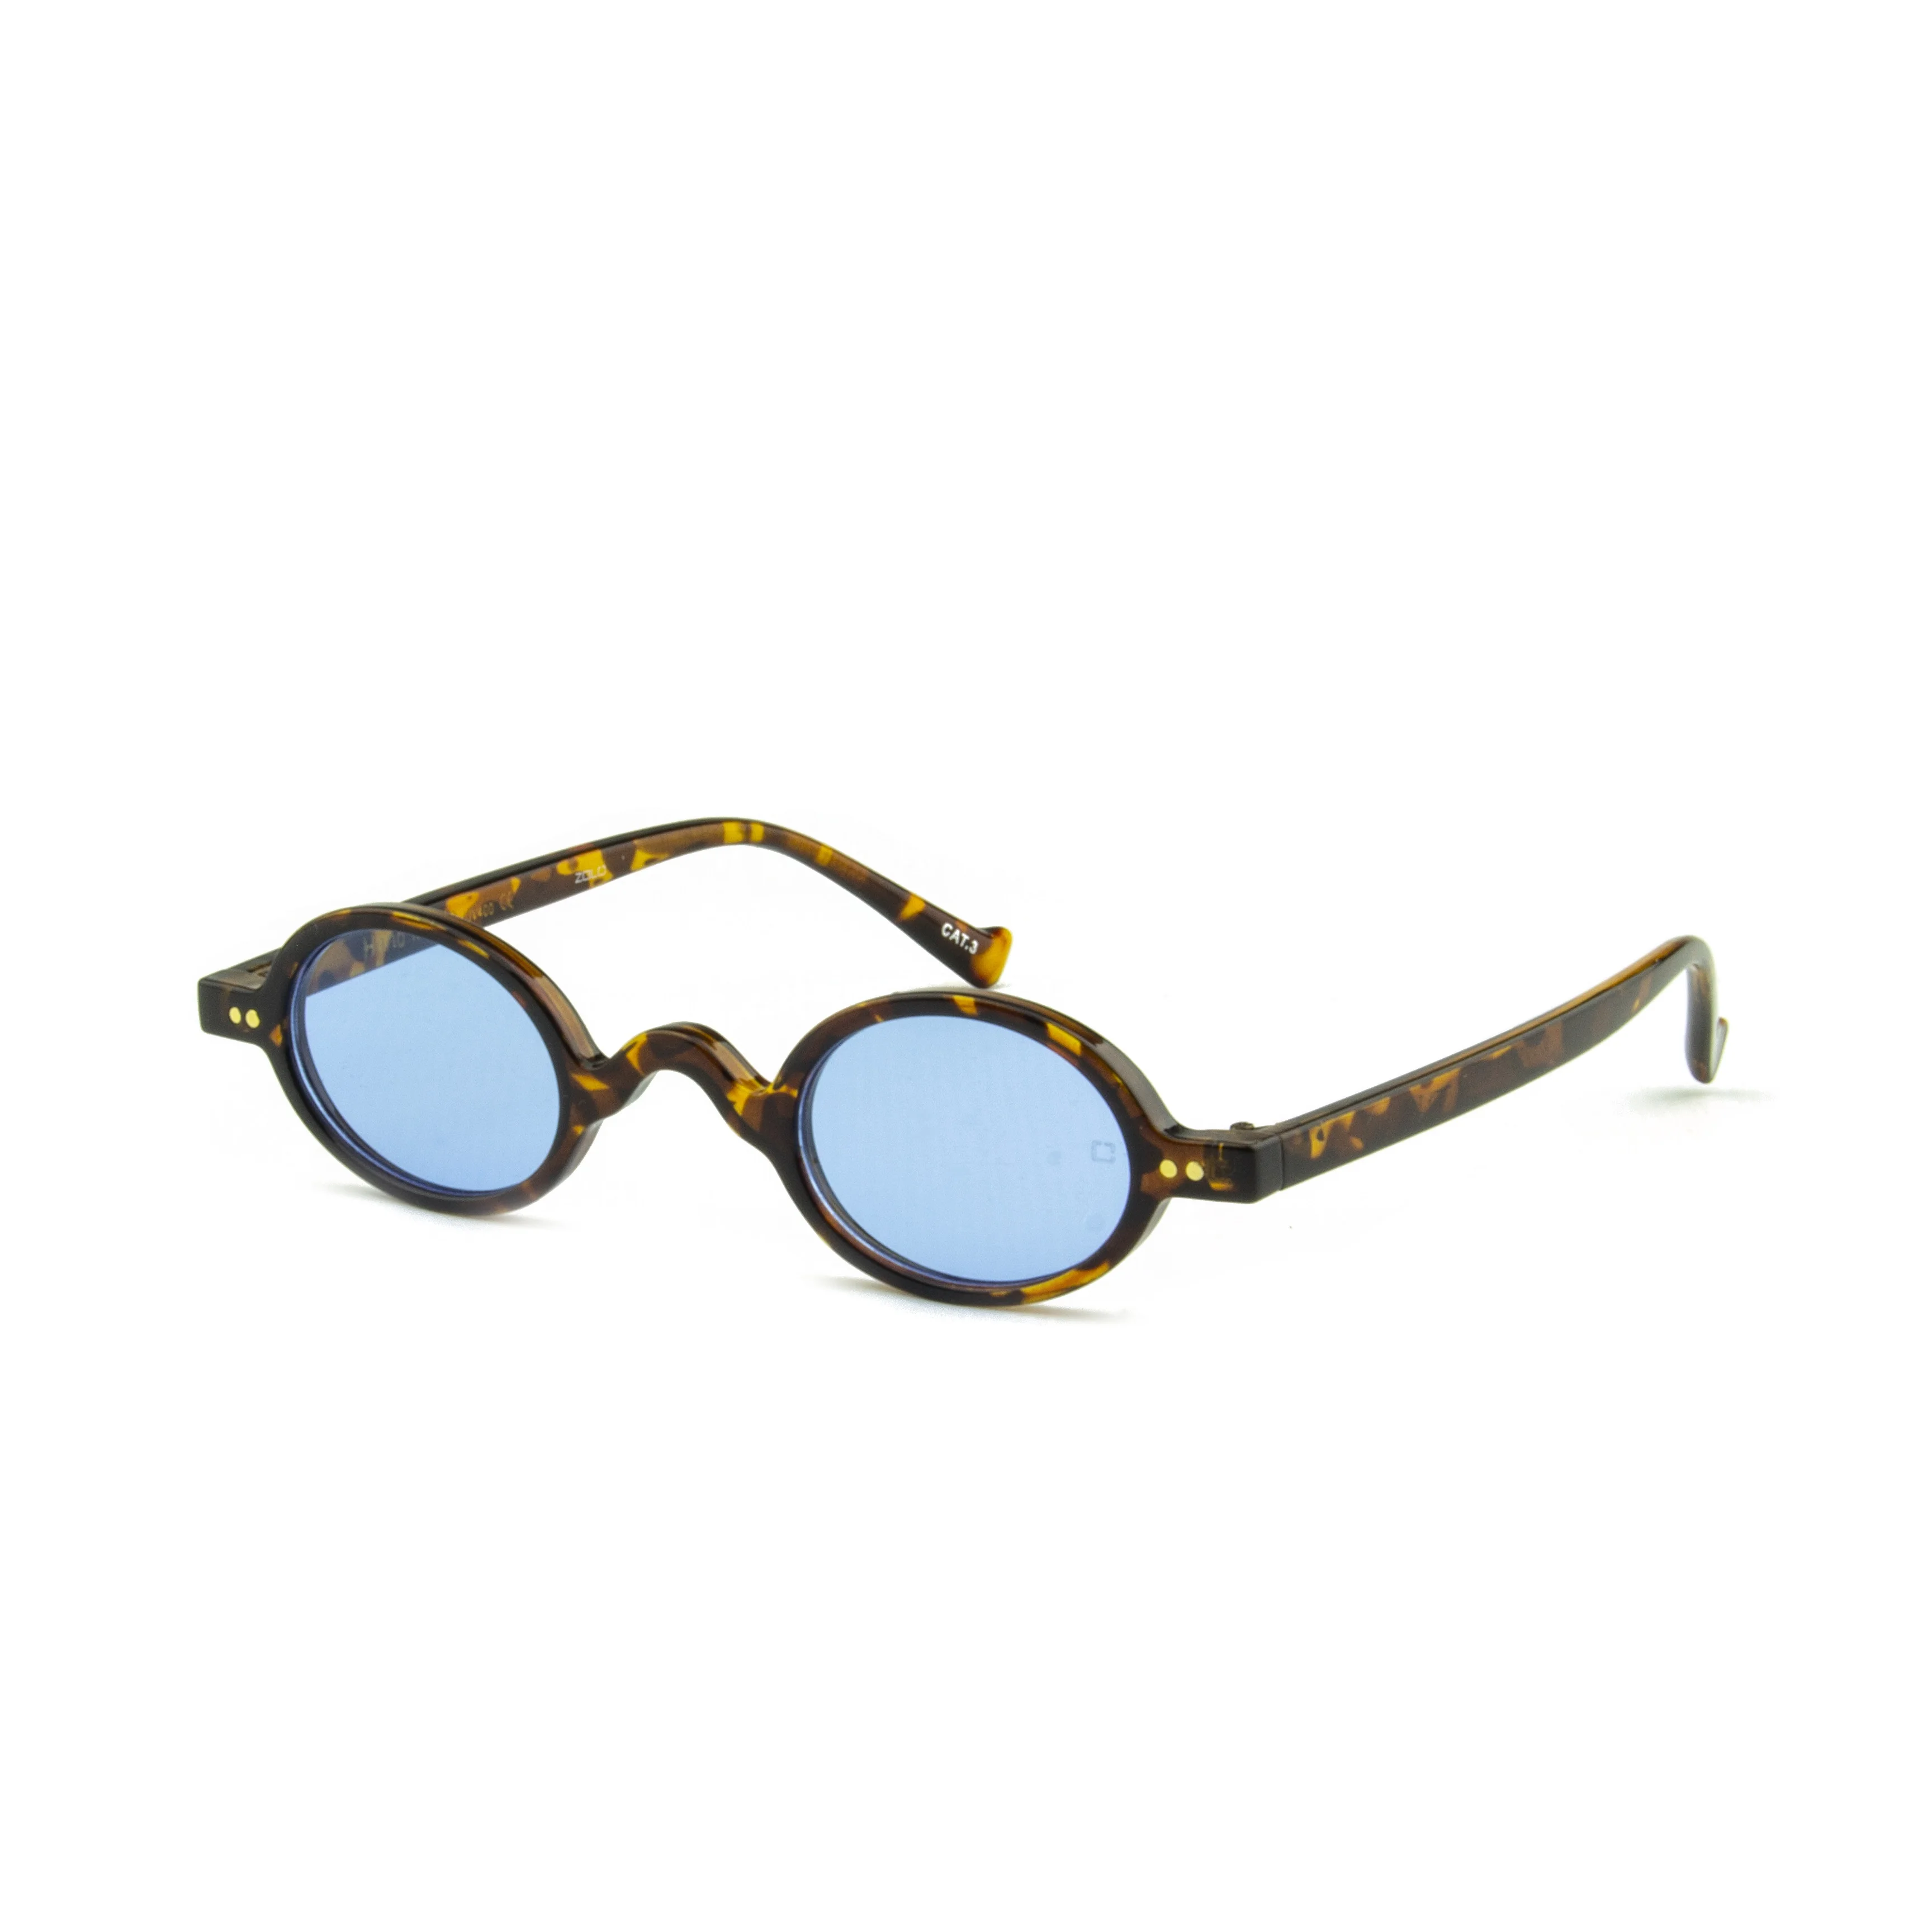 Zolo eyewear 97575 c2 brown/blue retro round sunglasses